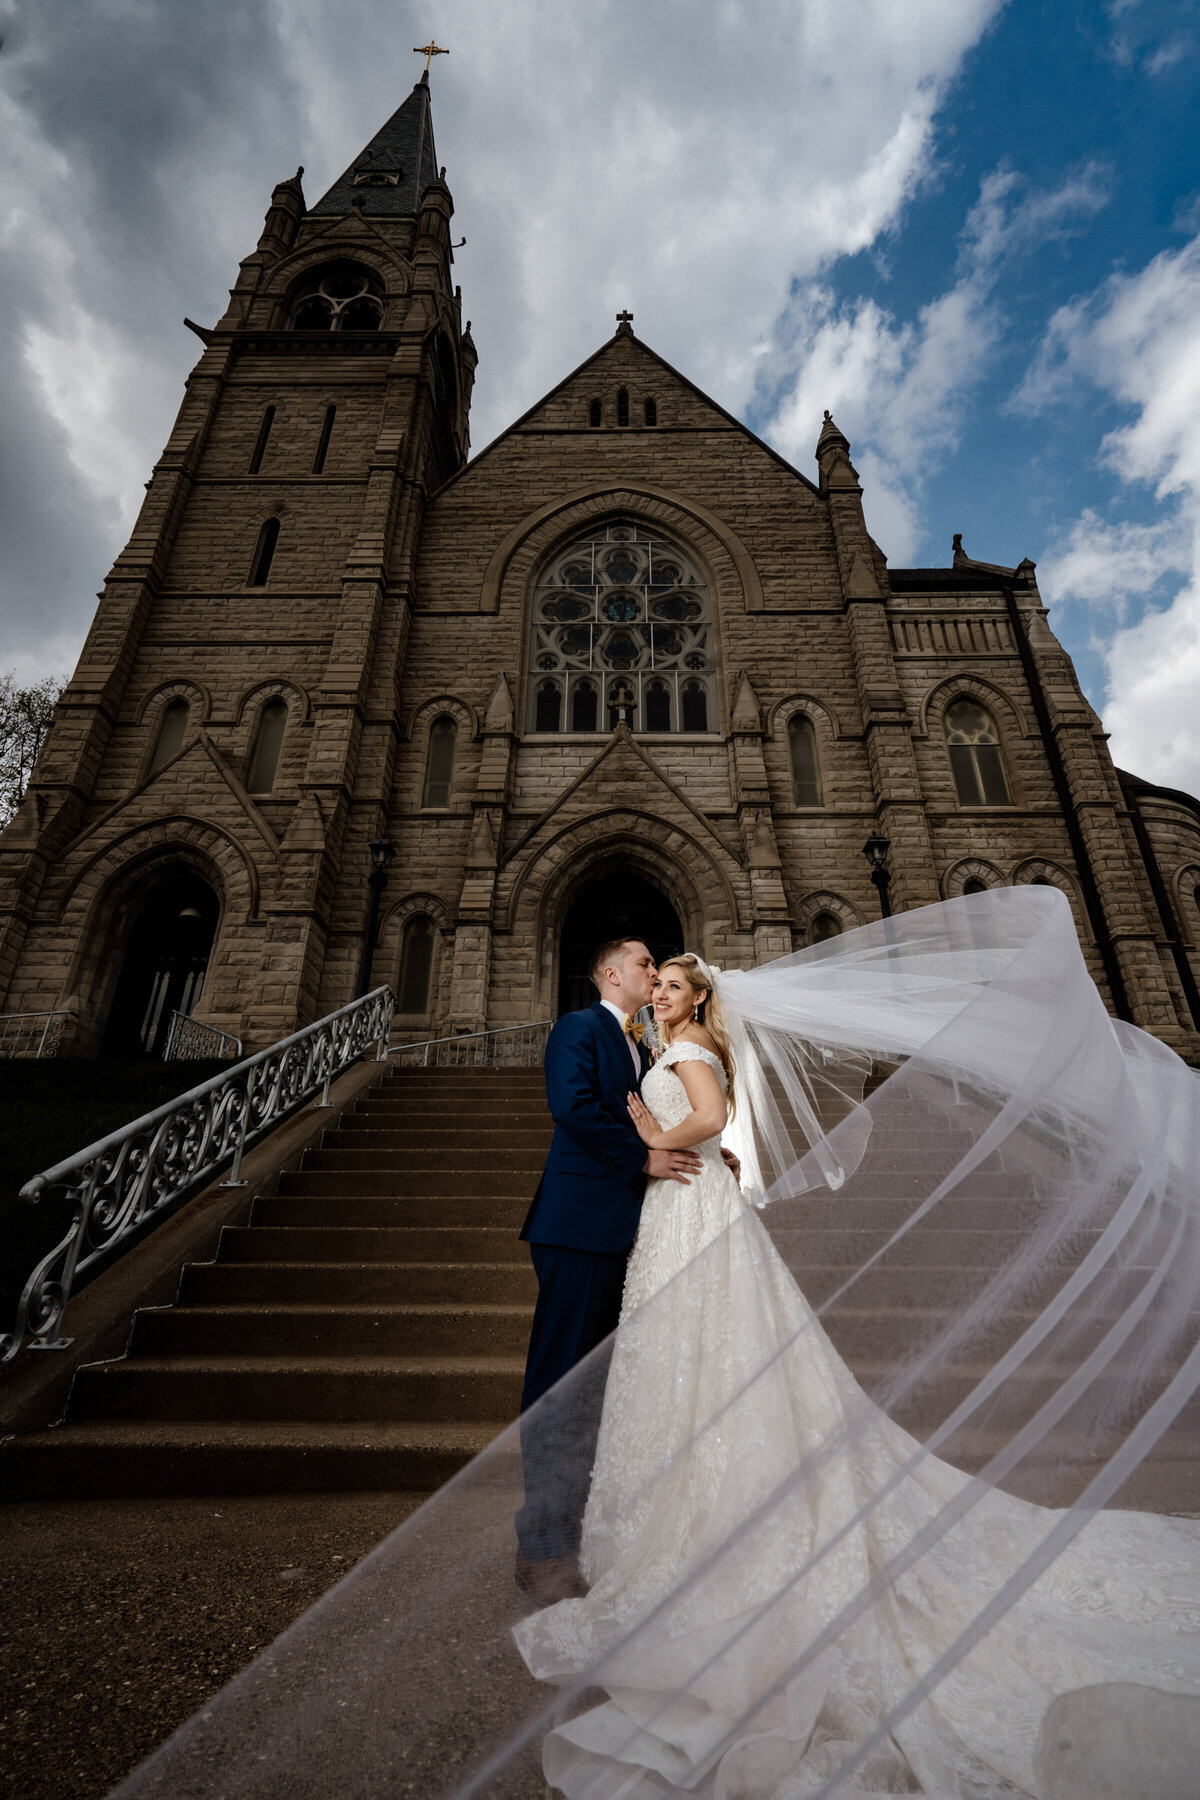 Aspen-Avenue_Chicago-Wedding-Photographer-off-camera-flash-epic-wedding-photo-epic-church-wow-grand-luxury